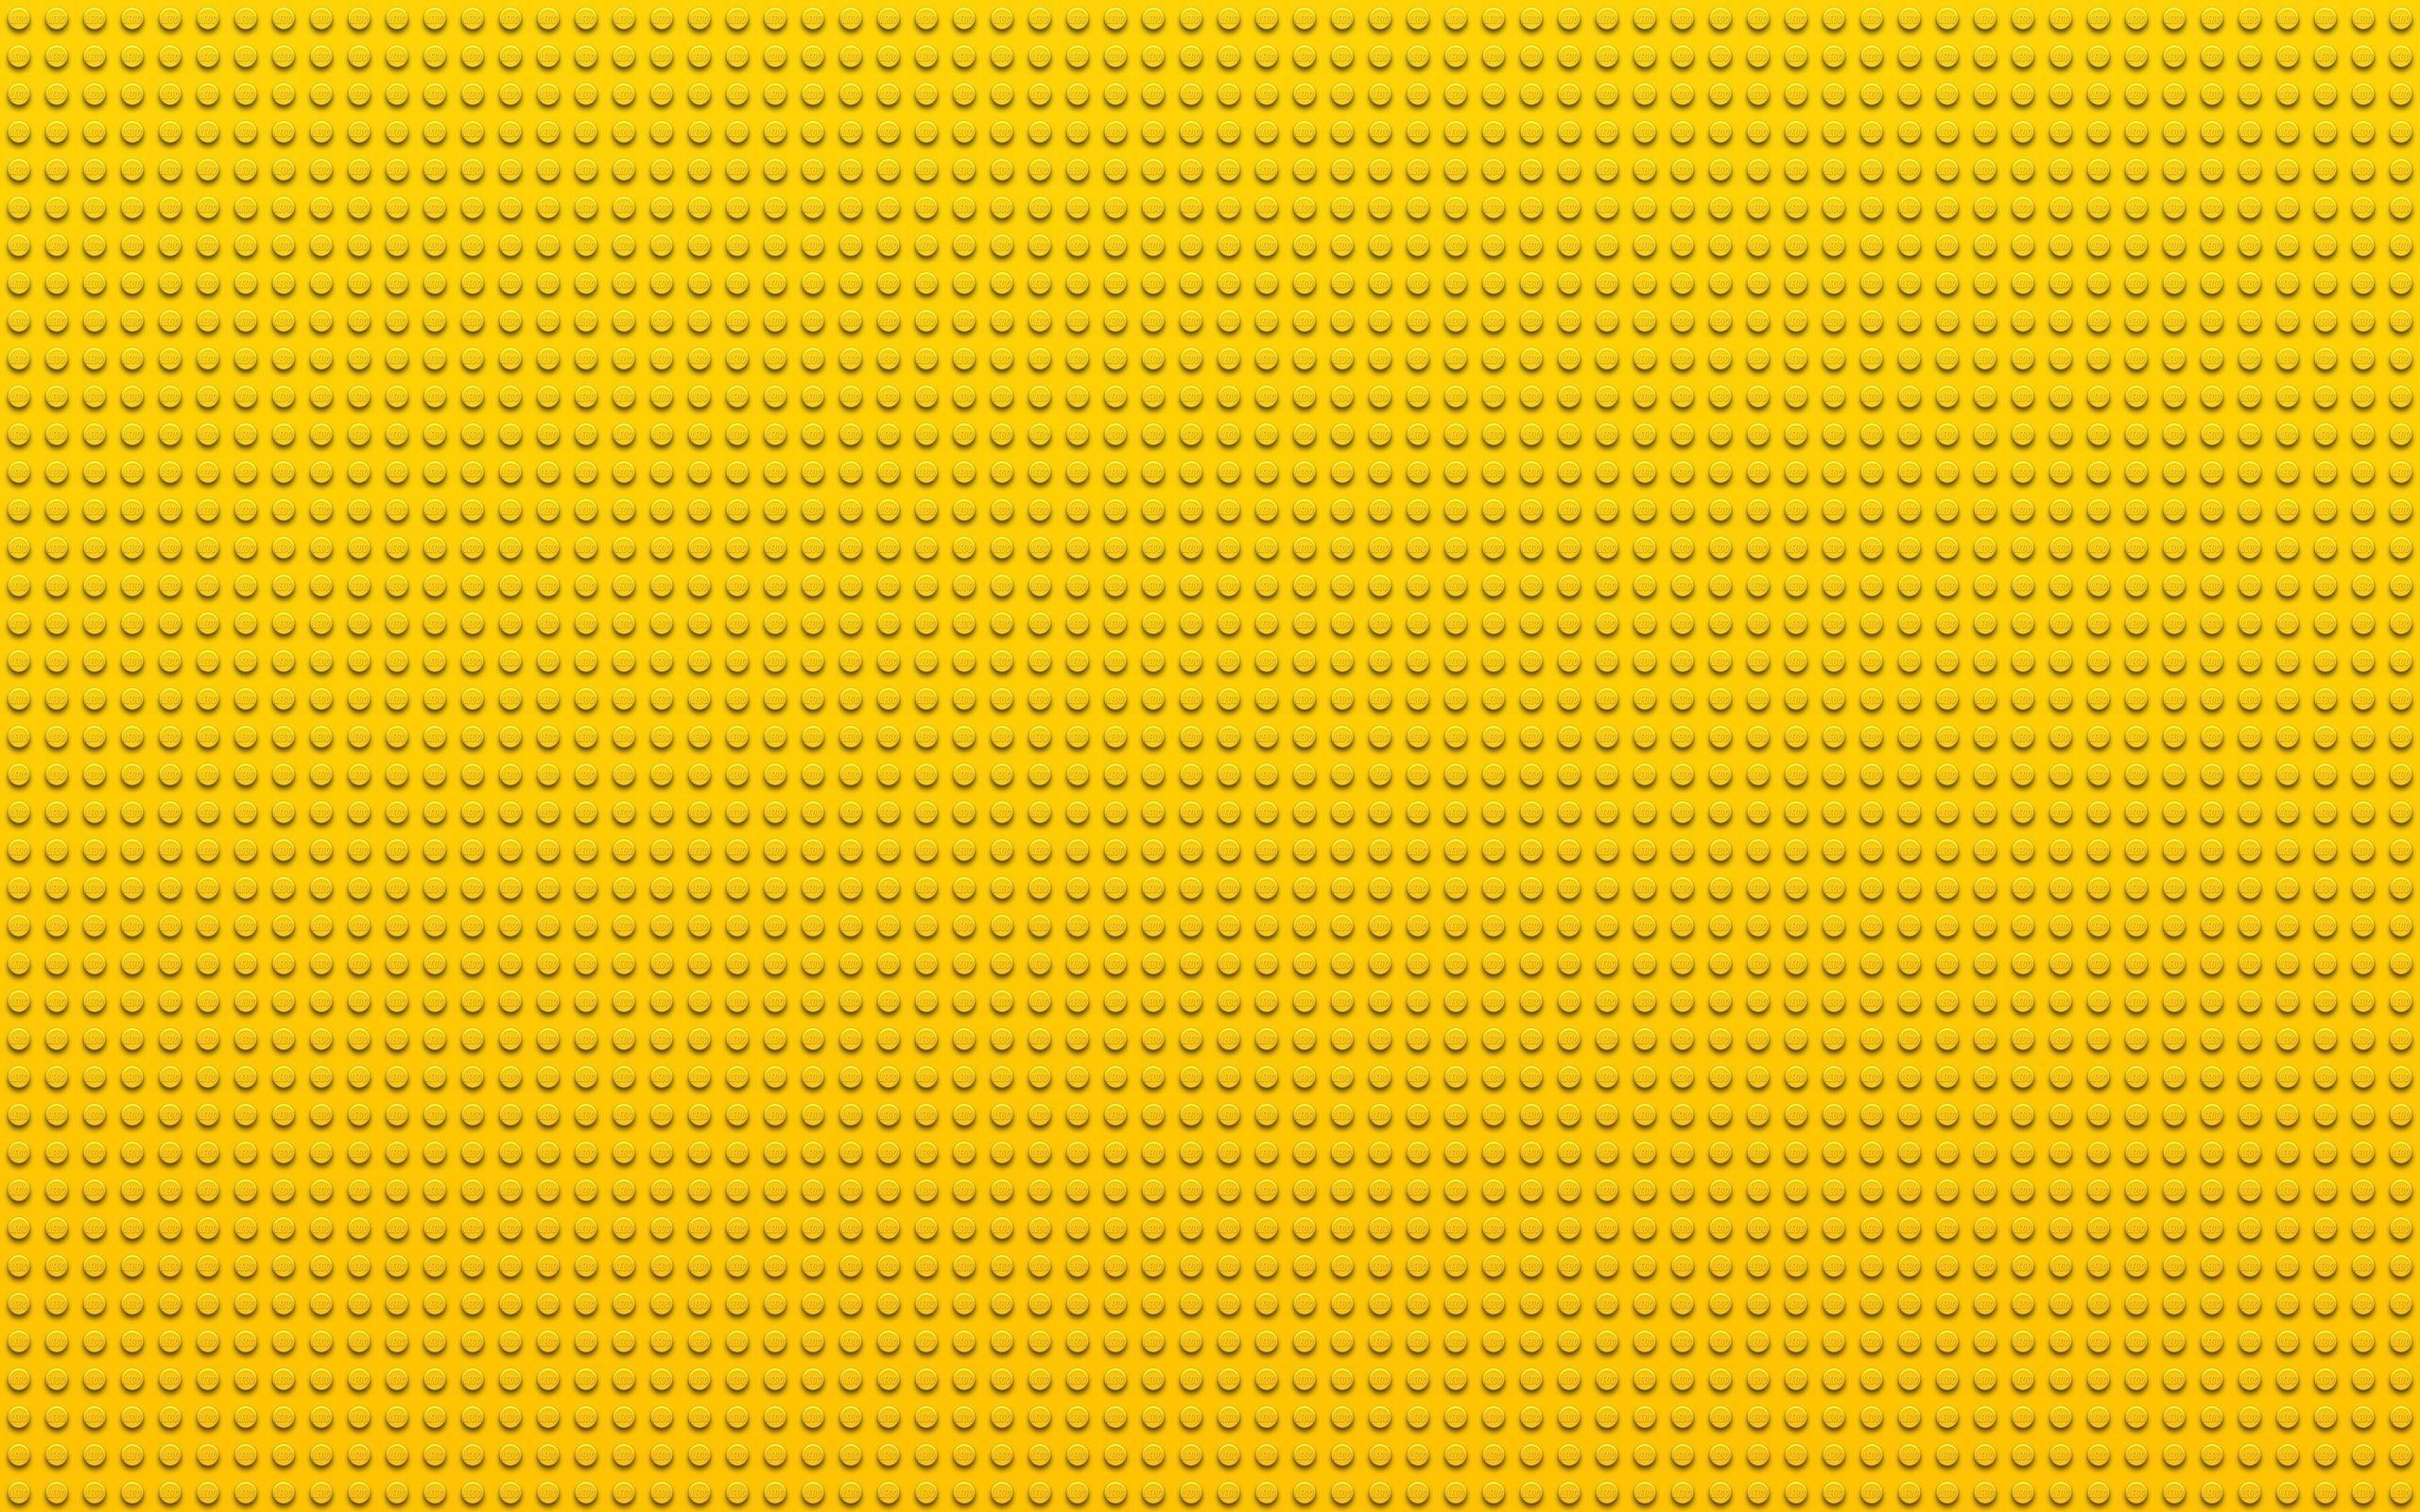 Wallpaper lego, points, circles, yellow